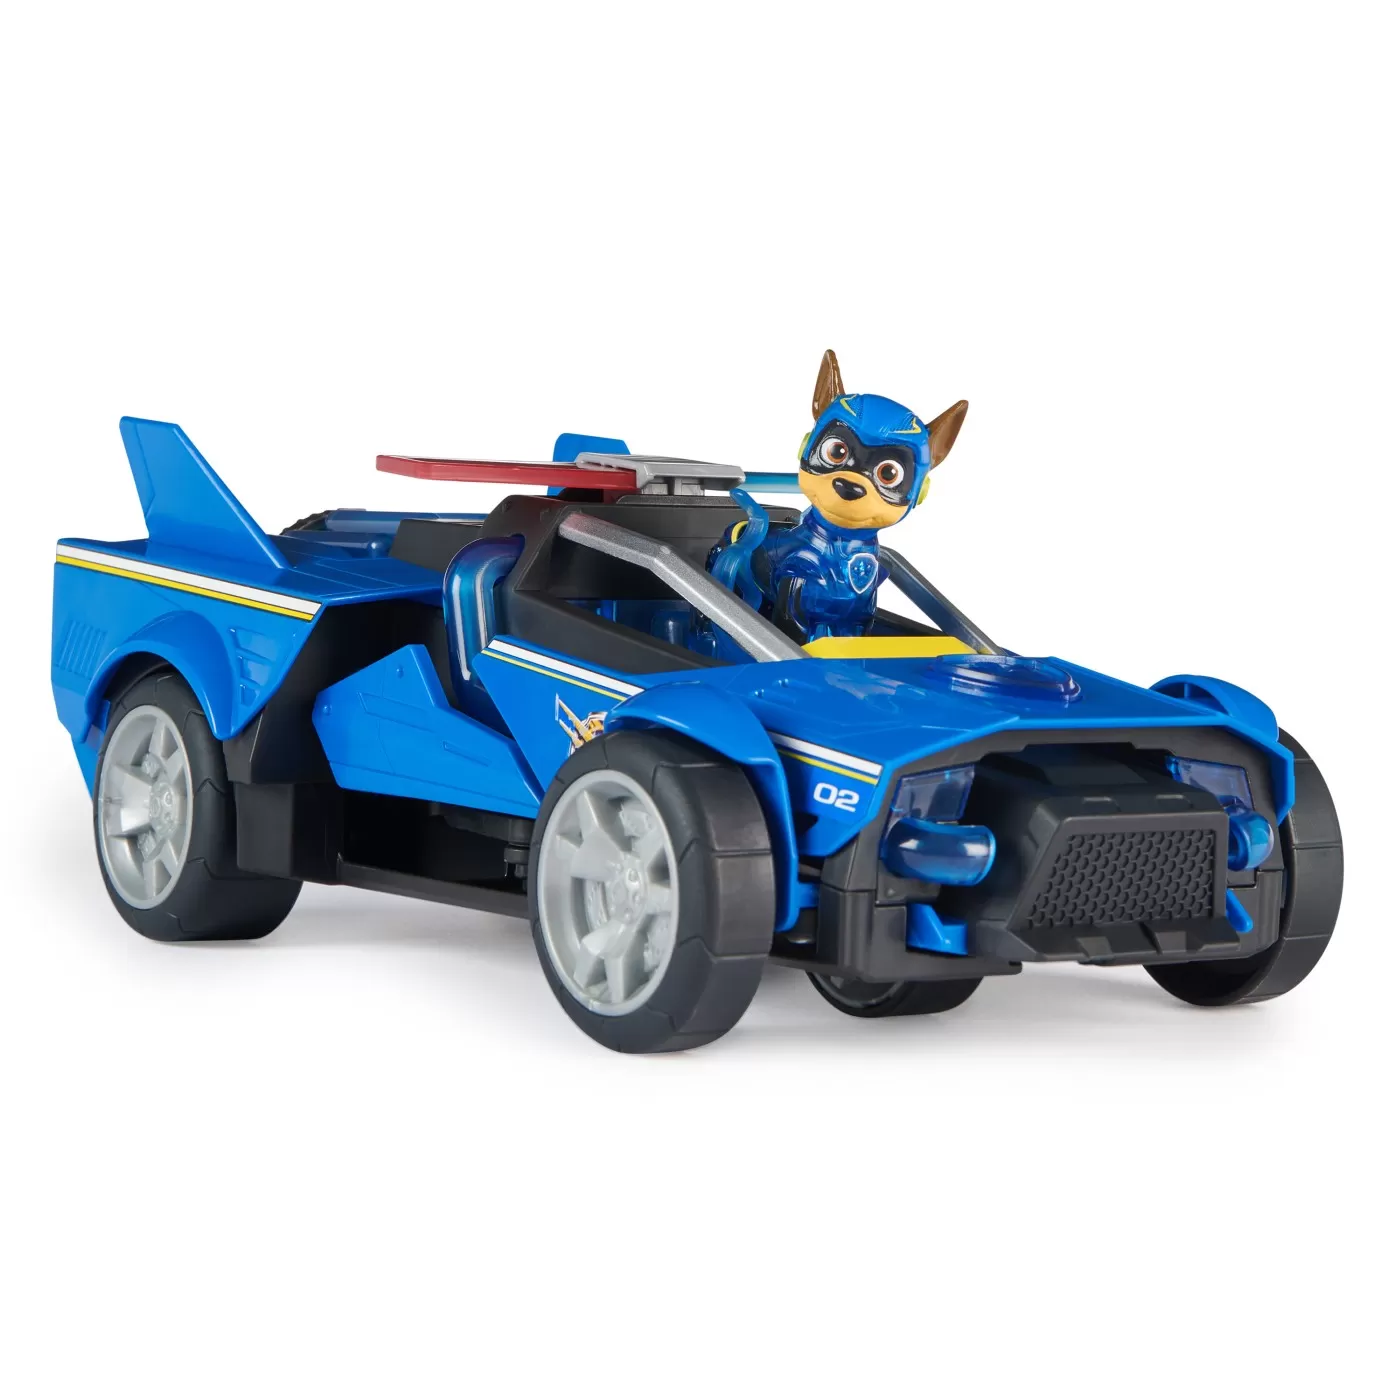 Vehicul transformabil cu figurina Chase Patrula Catelusilor, Nickelodeon